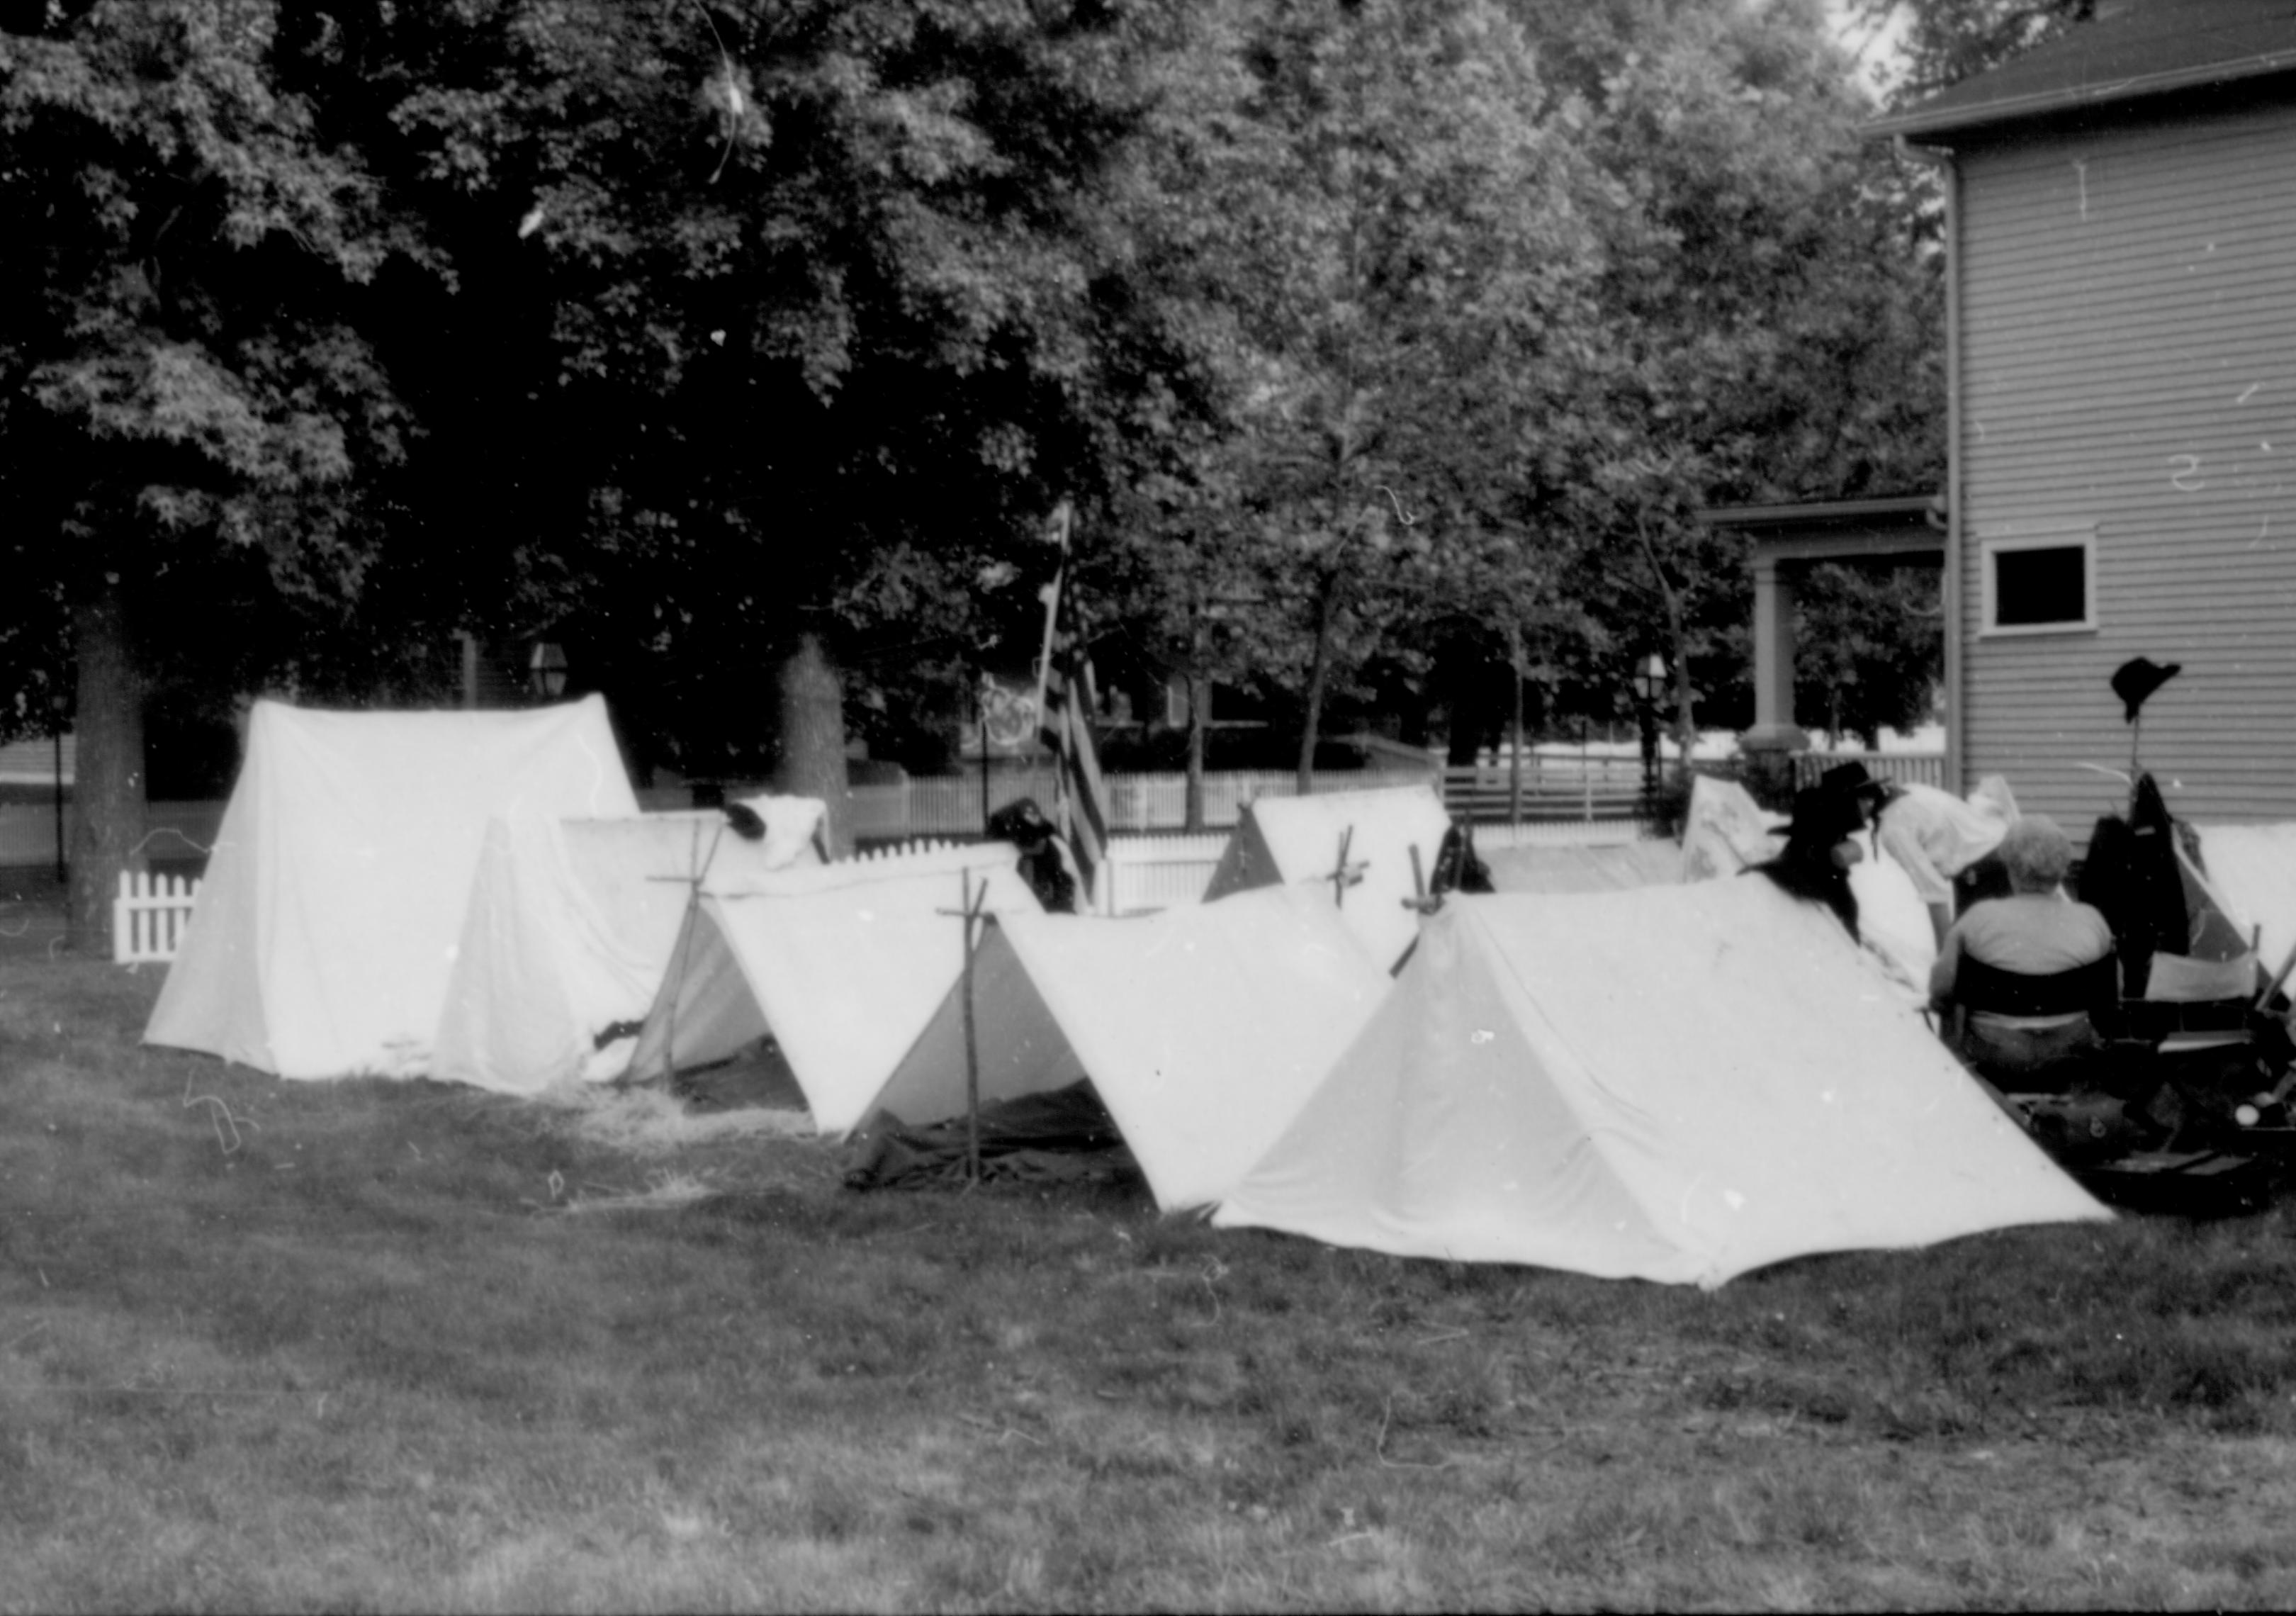 NA Lincoln Home NHS- Lincoln Festival, 146 Lincoln Festival, encampment